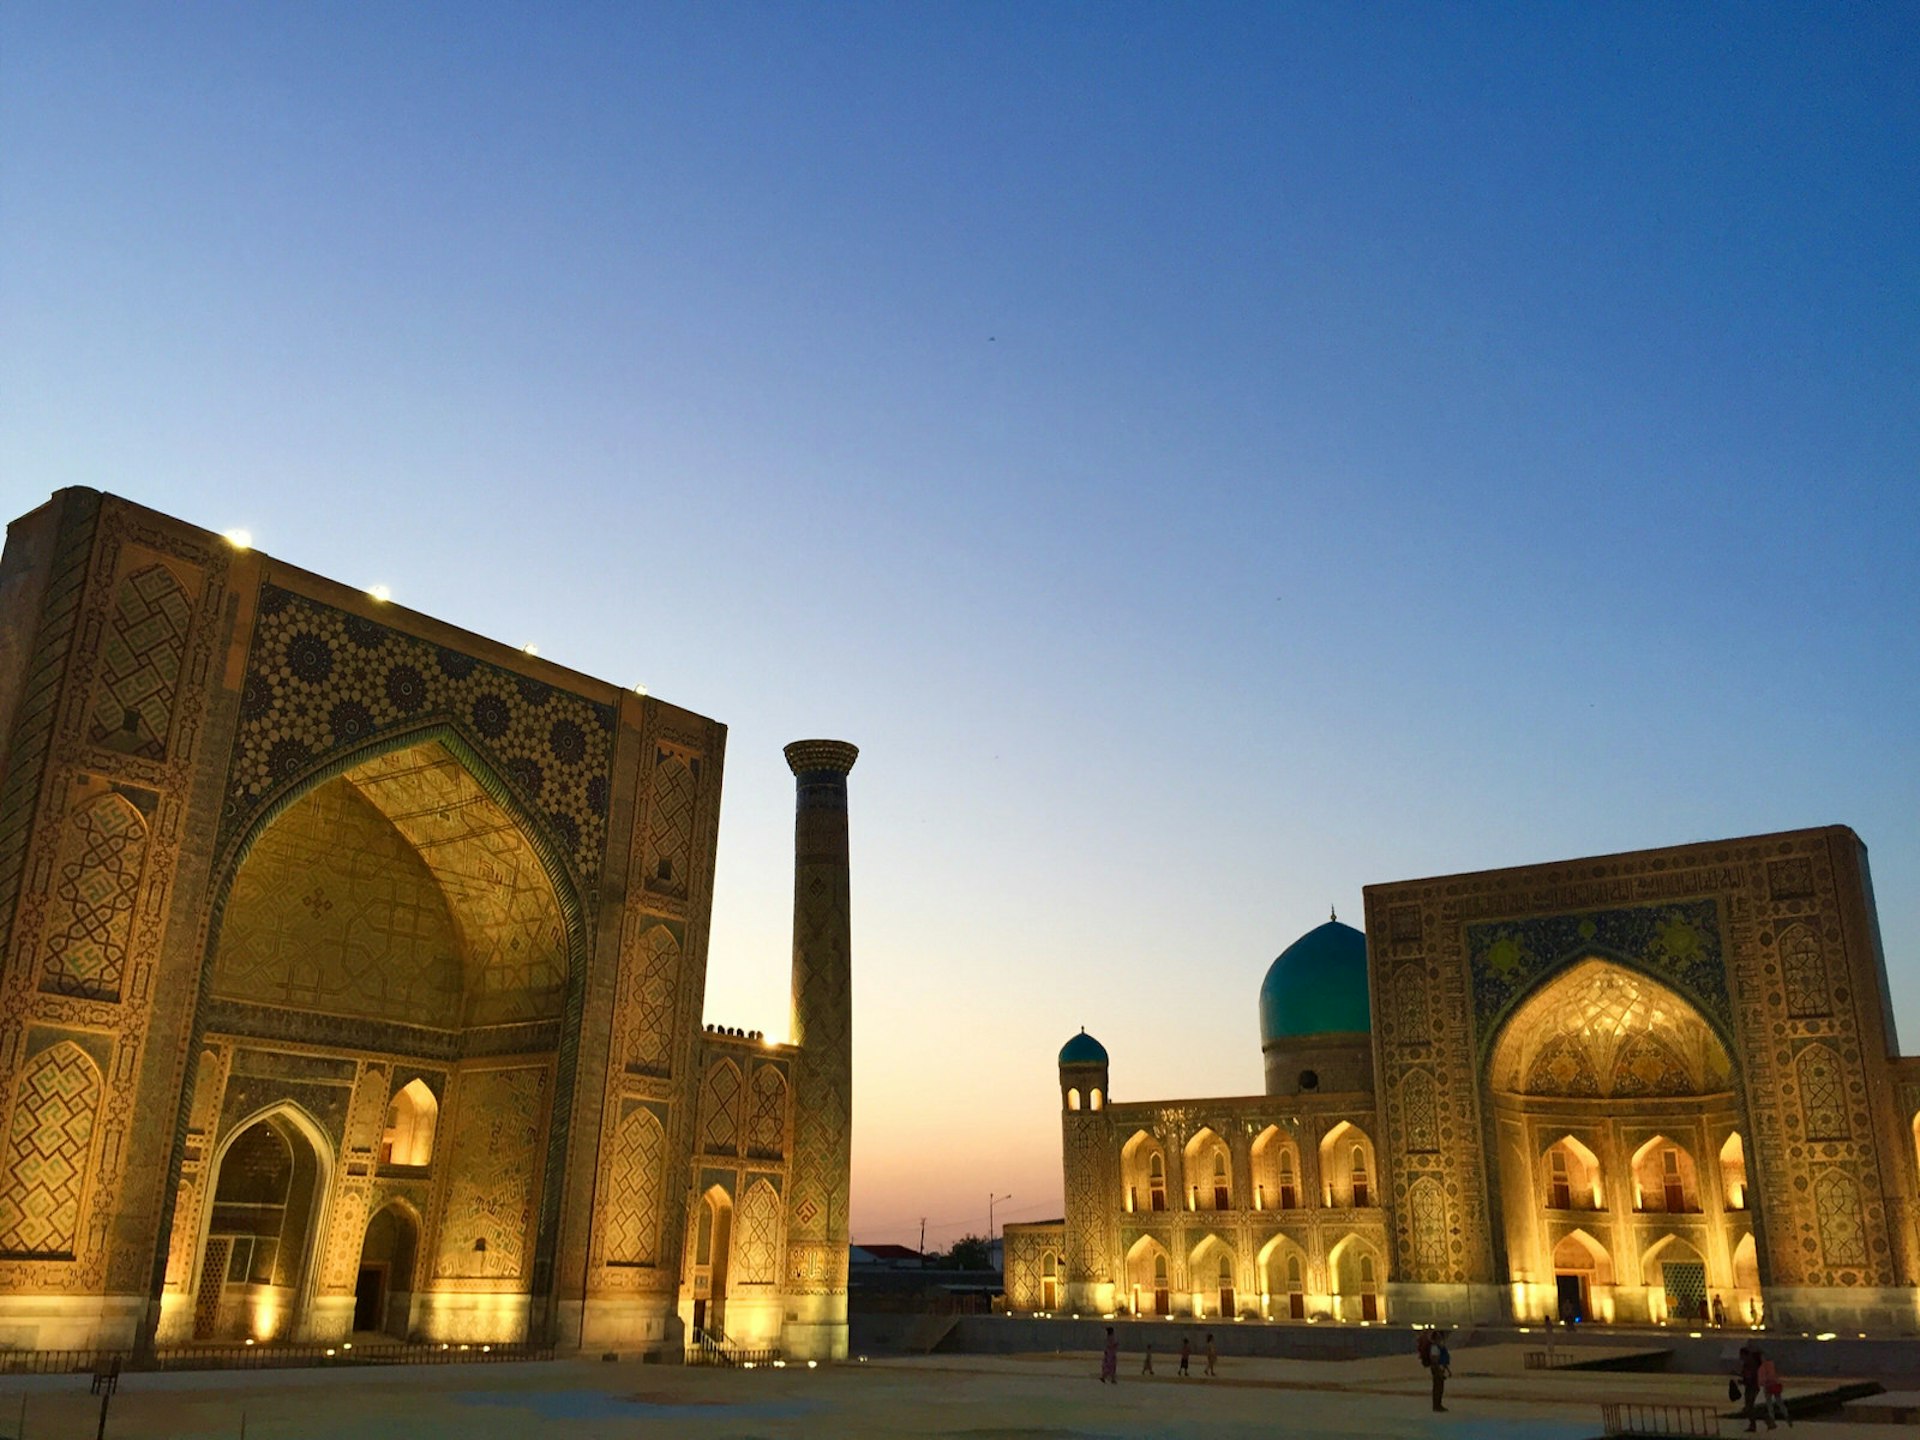 Samarkand's illuminated Registan Square at dusk